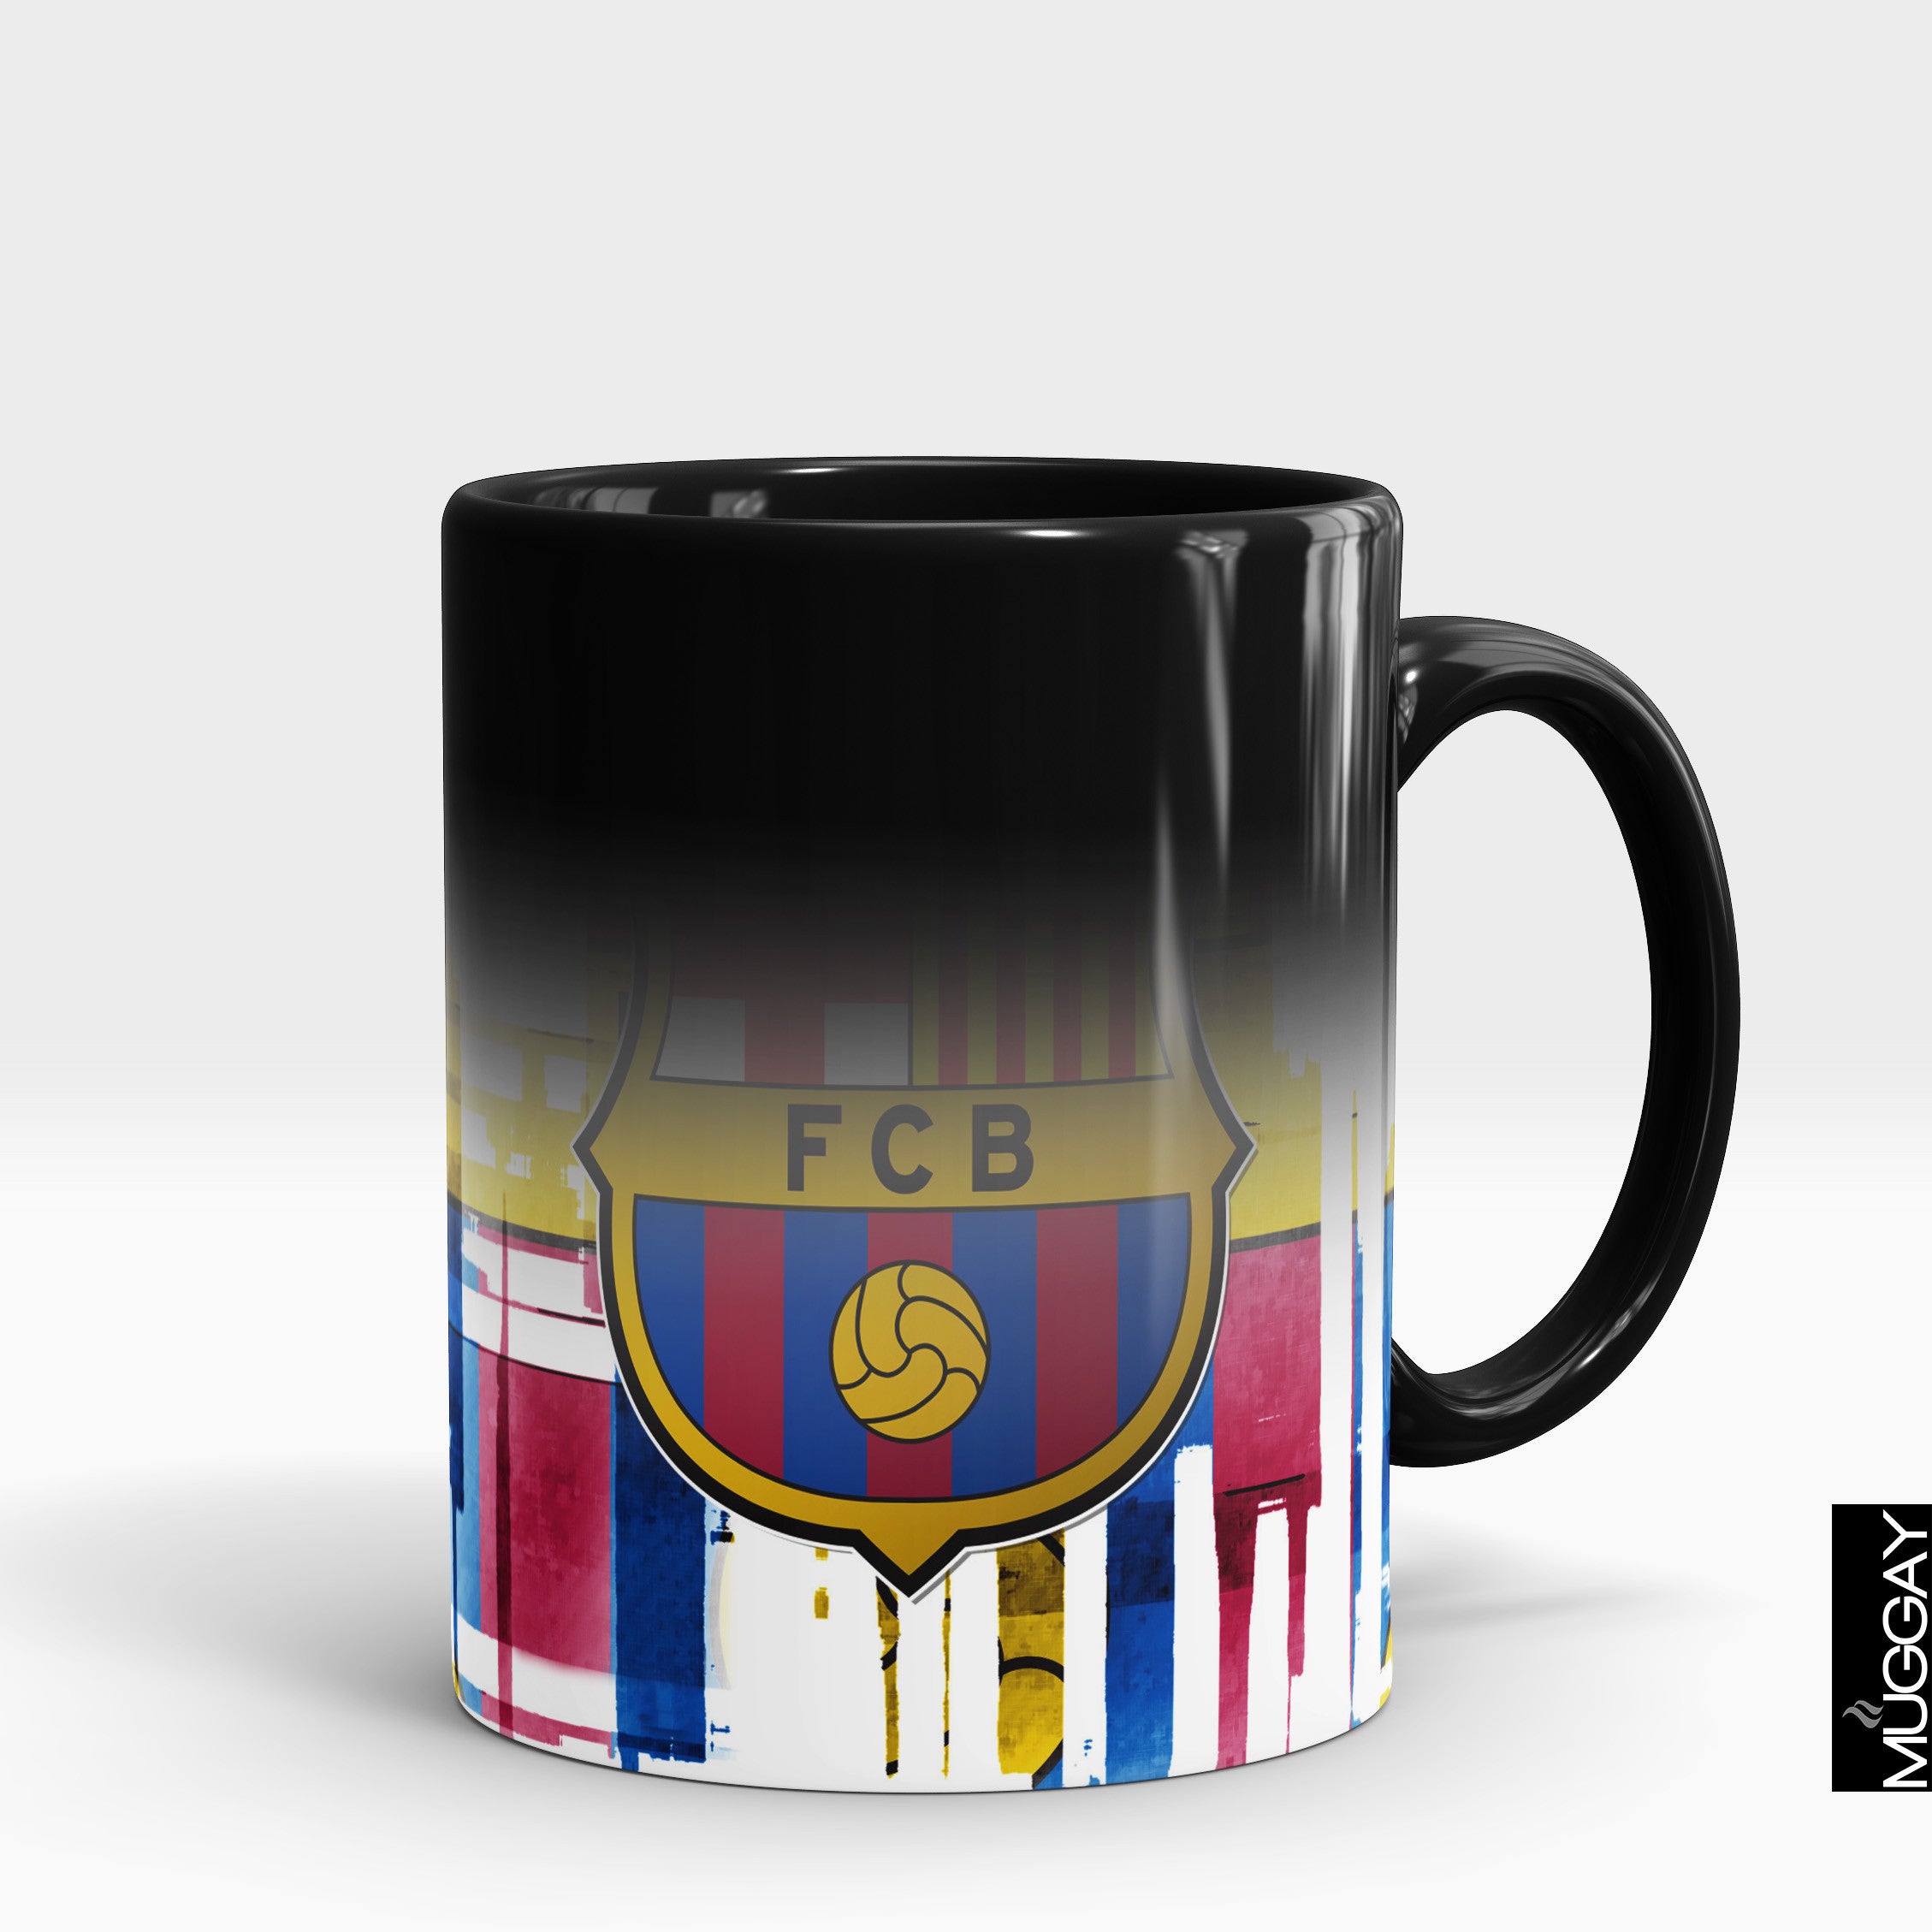 Football Theme mugs30